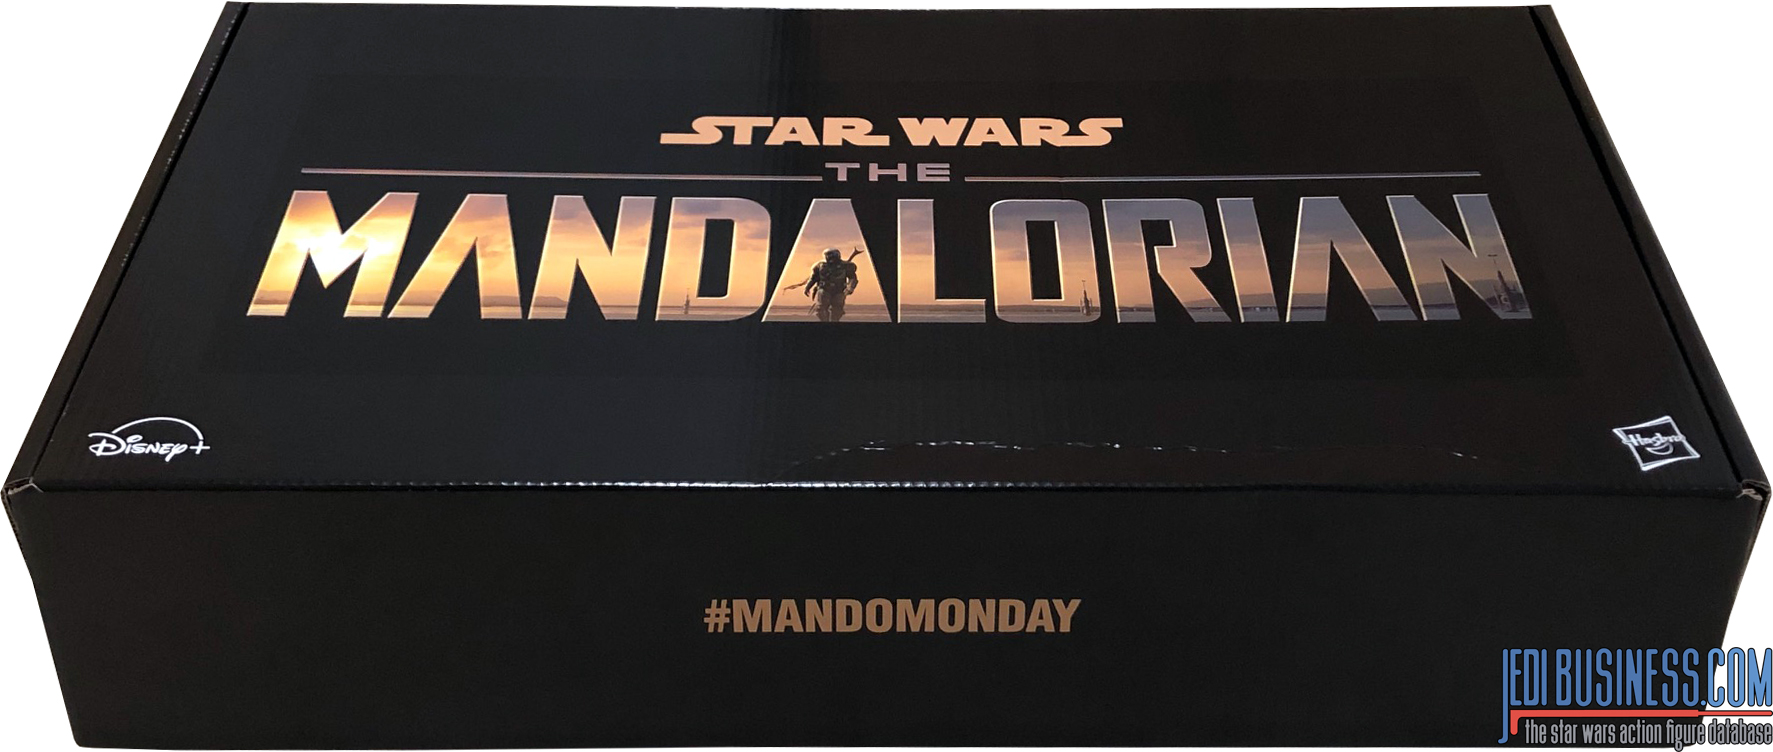 Mando Monday Promo Box